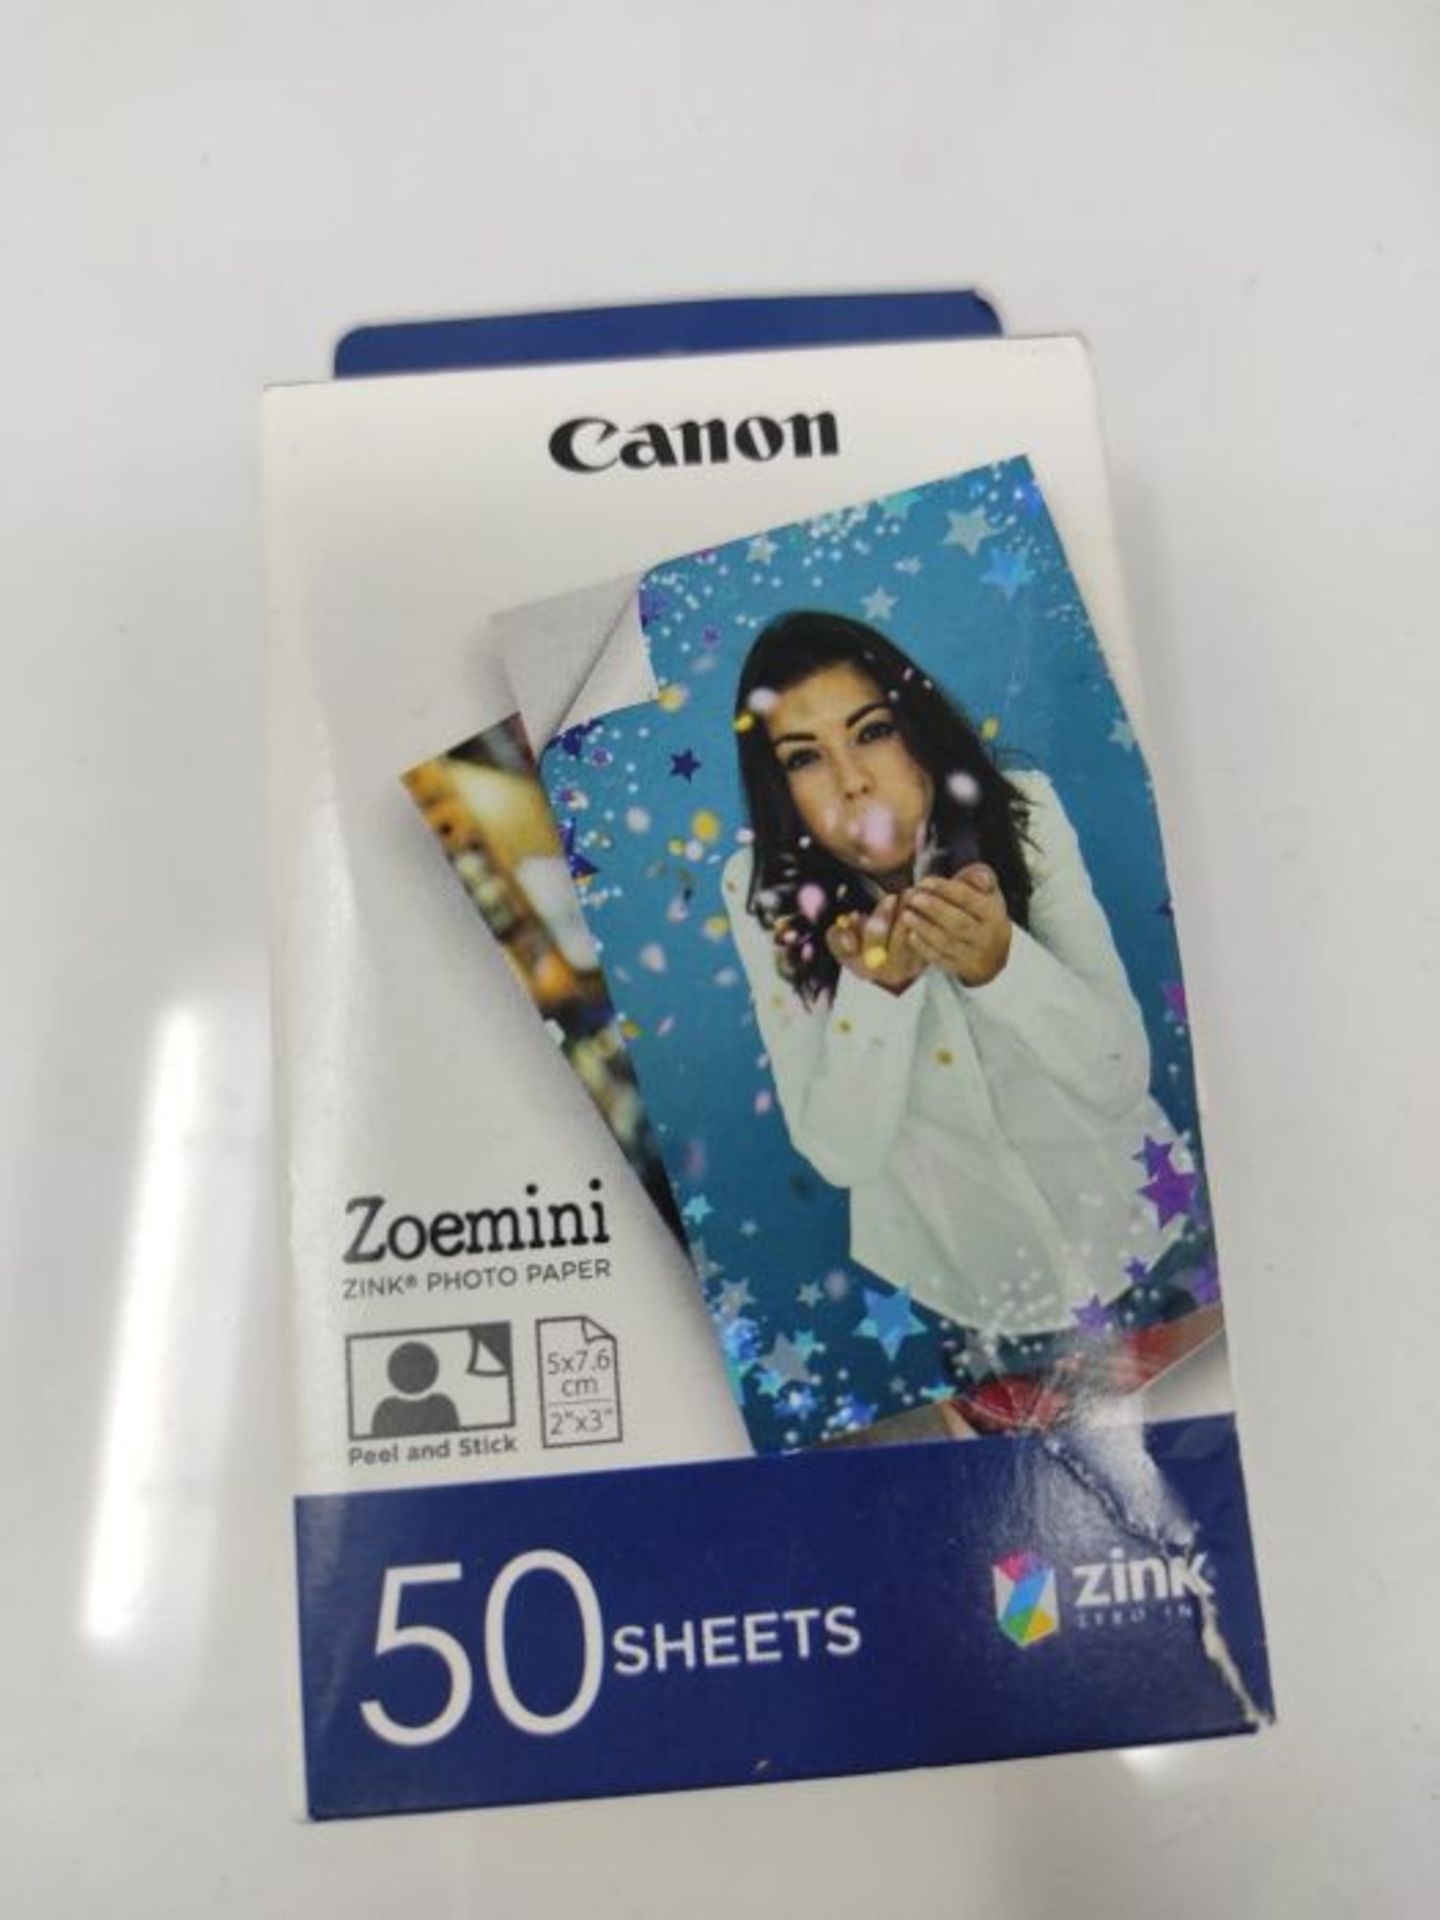 Canon Zoemini ZINK Fotopapier, 50 Blatt - Image 2 of 2